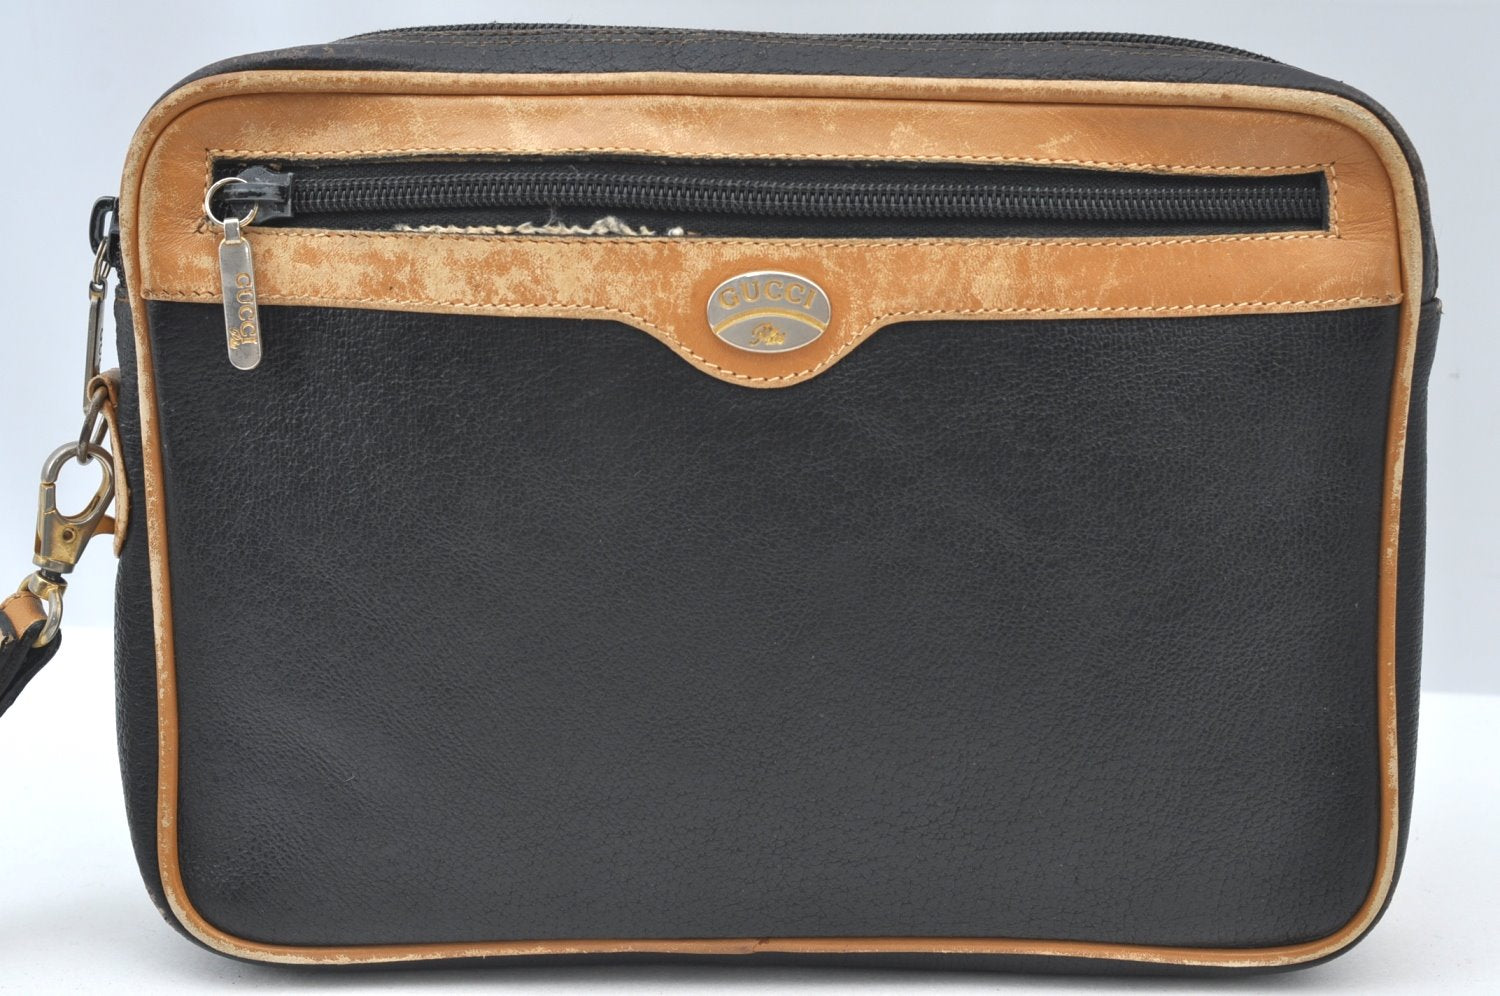 Authentic GUCCI Vintage Clutch Hand Bag Purse Leather Black Brown K8326